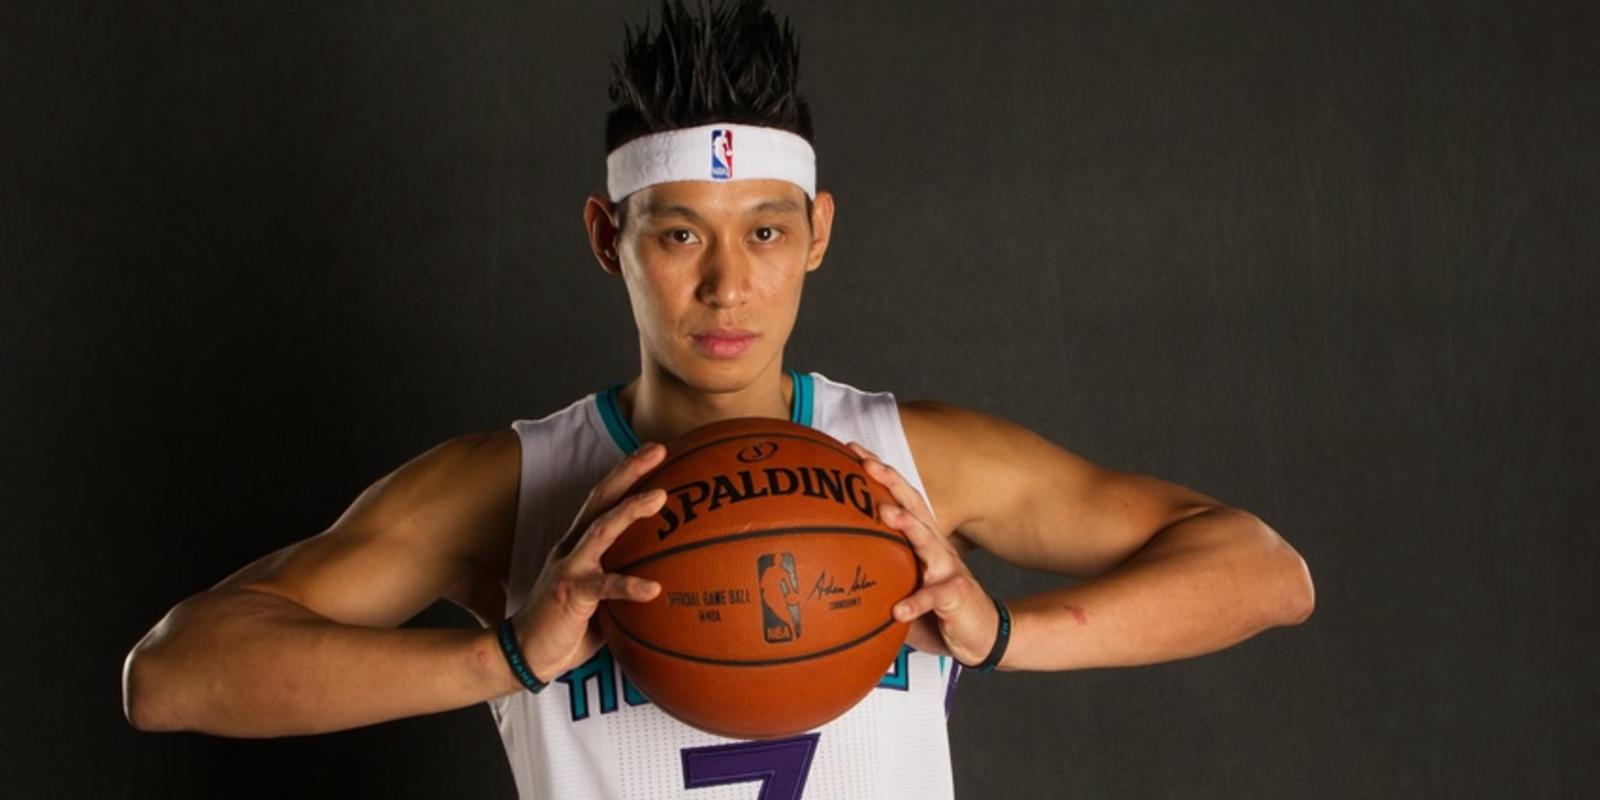 Xtep - Want to shine like Jeremy Lin on the basketball